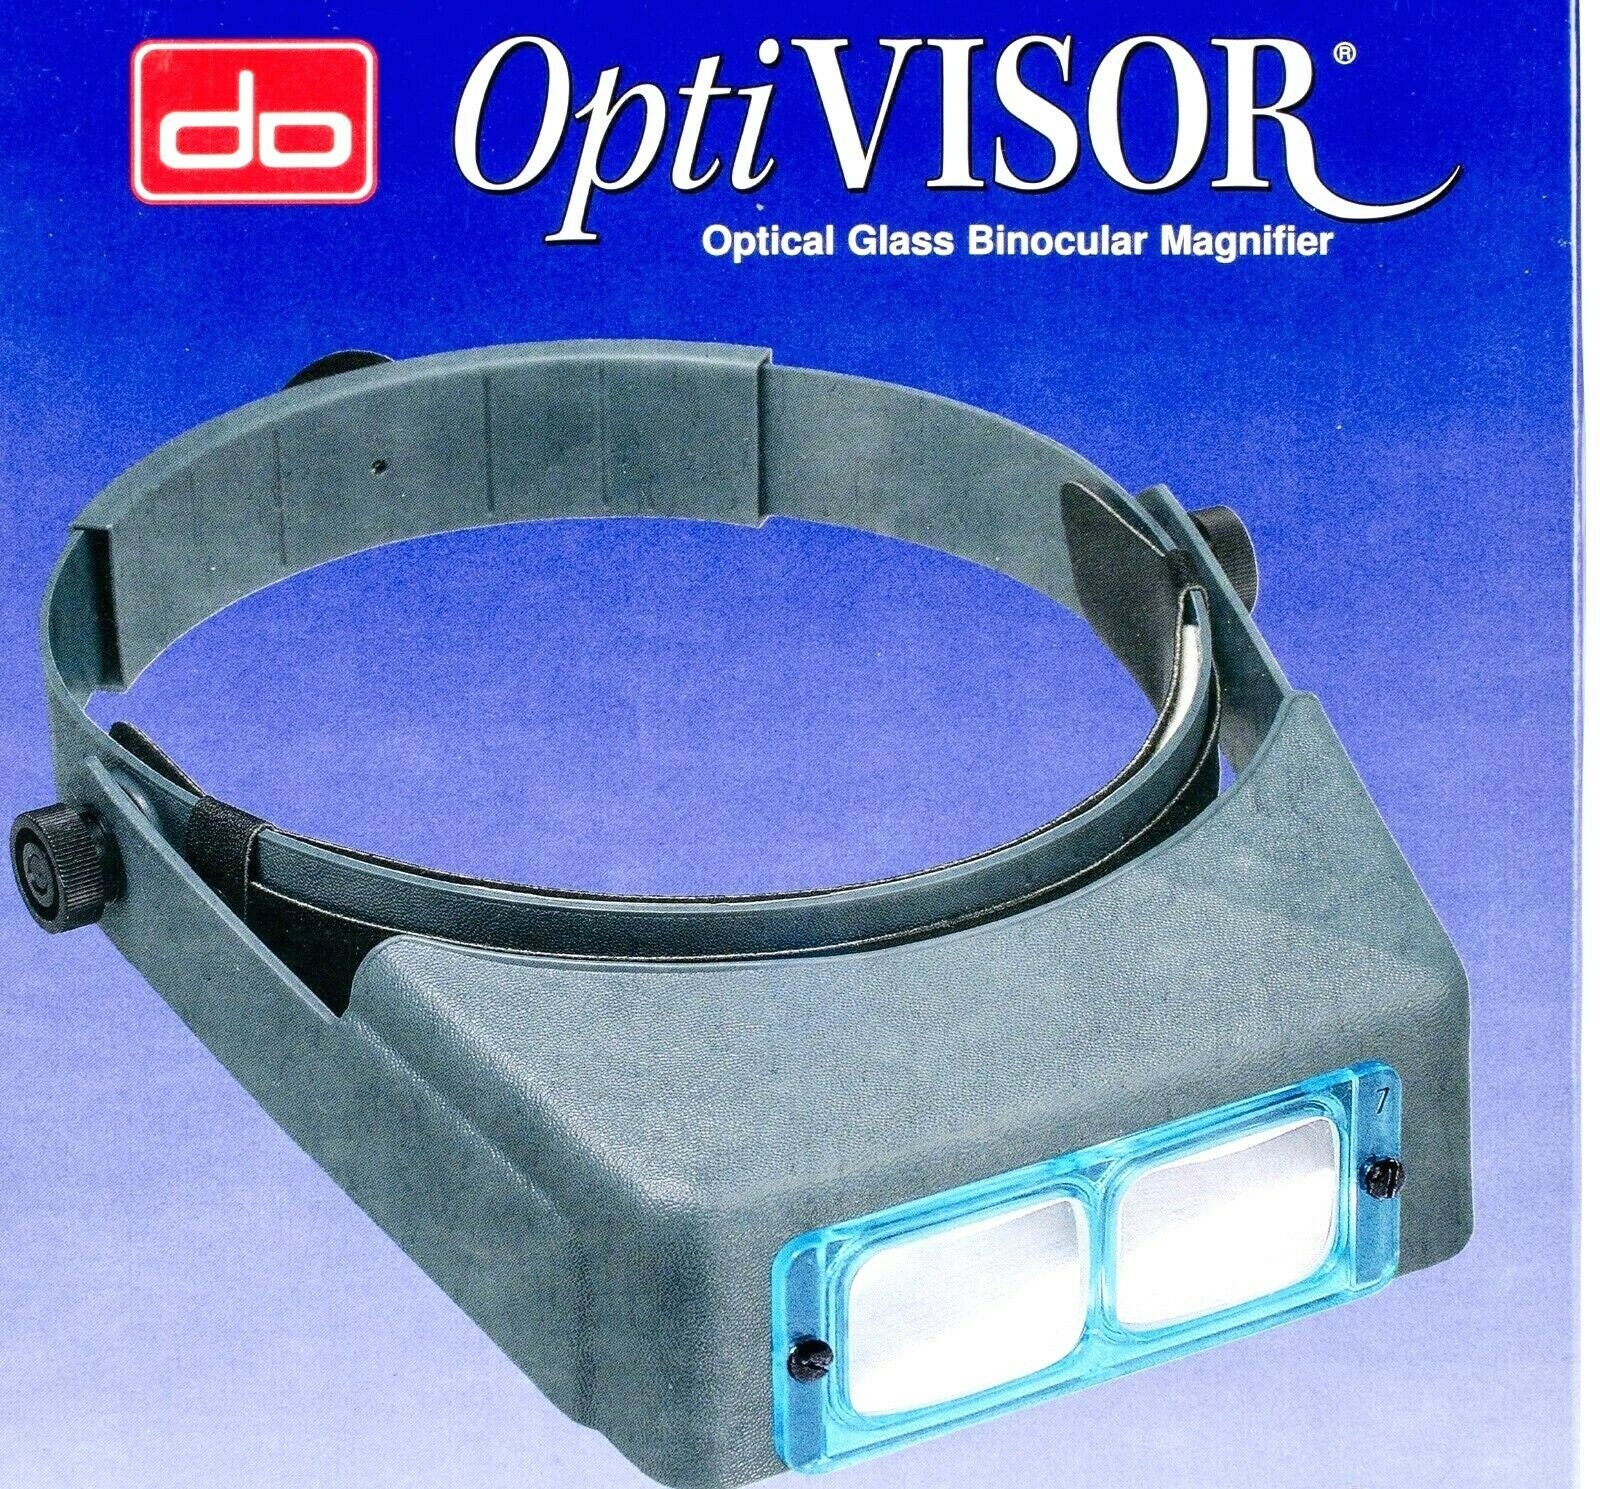 6 Focal Length Magnifying Optivisor 2.75X Jewelry Making Inspection Repair Magnifier  Visor 29.474 